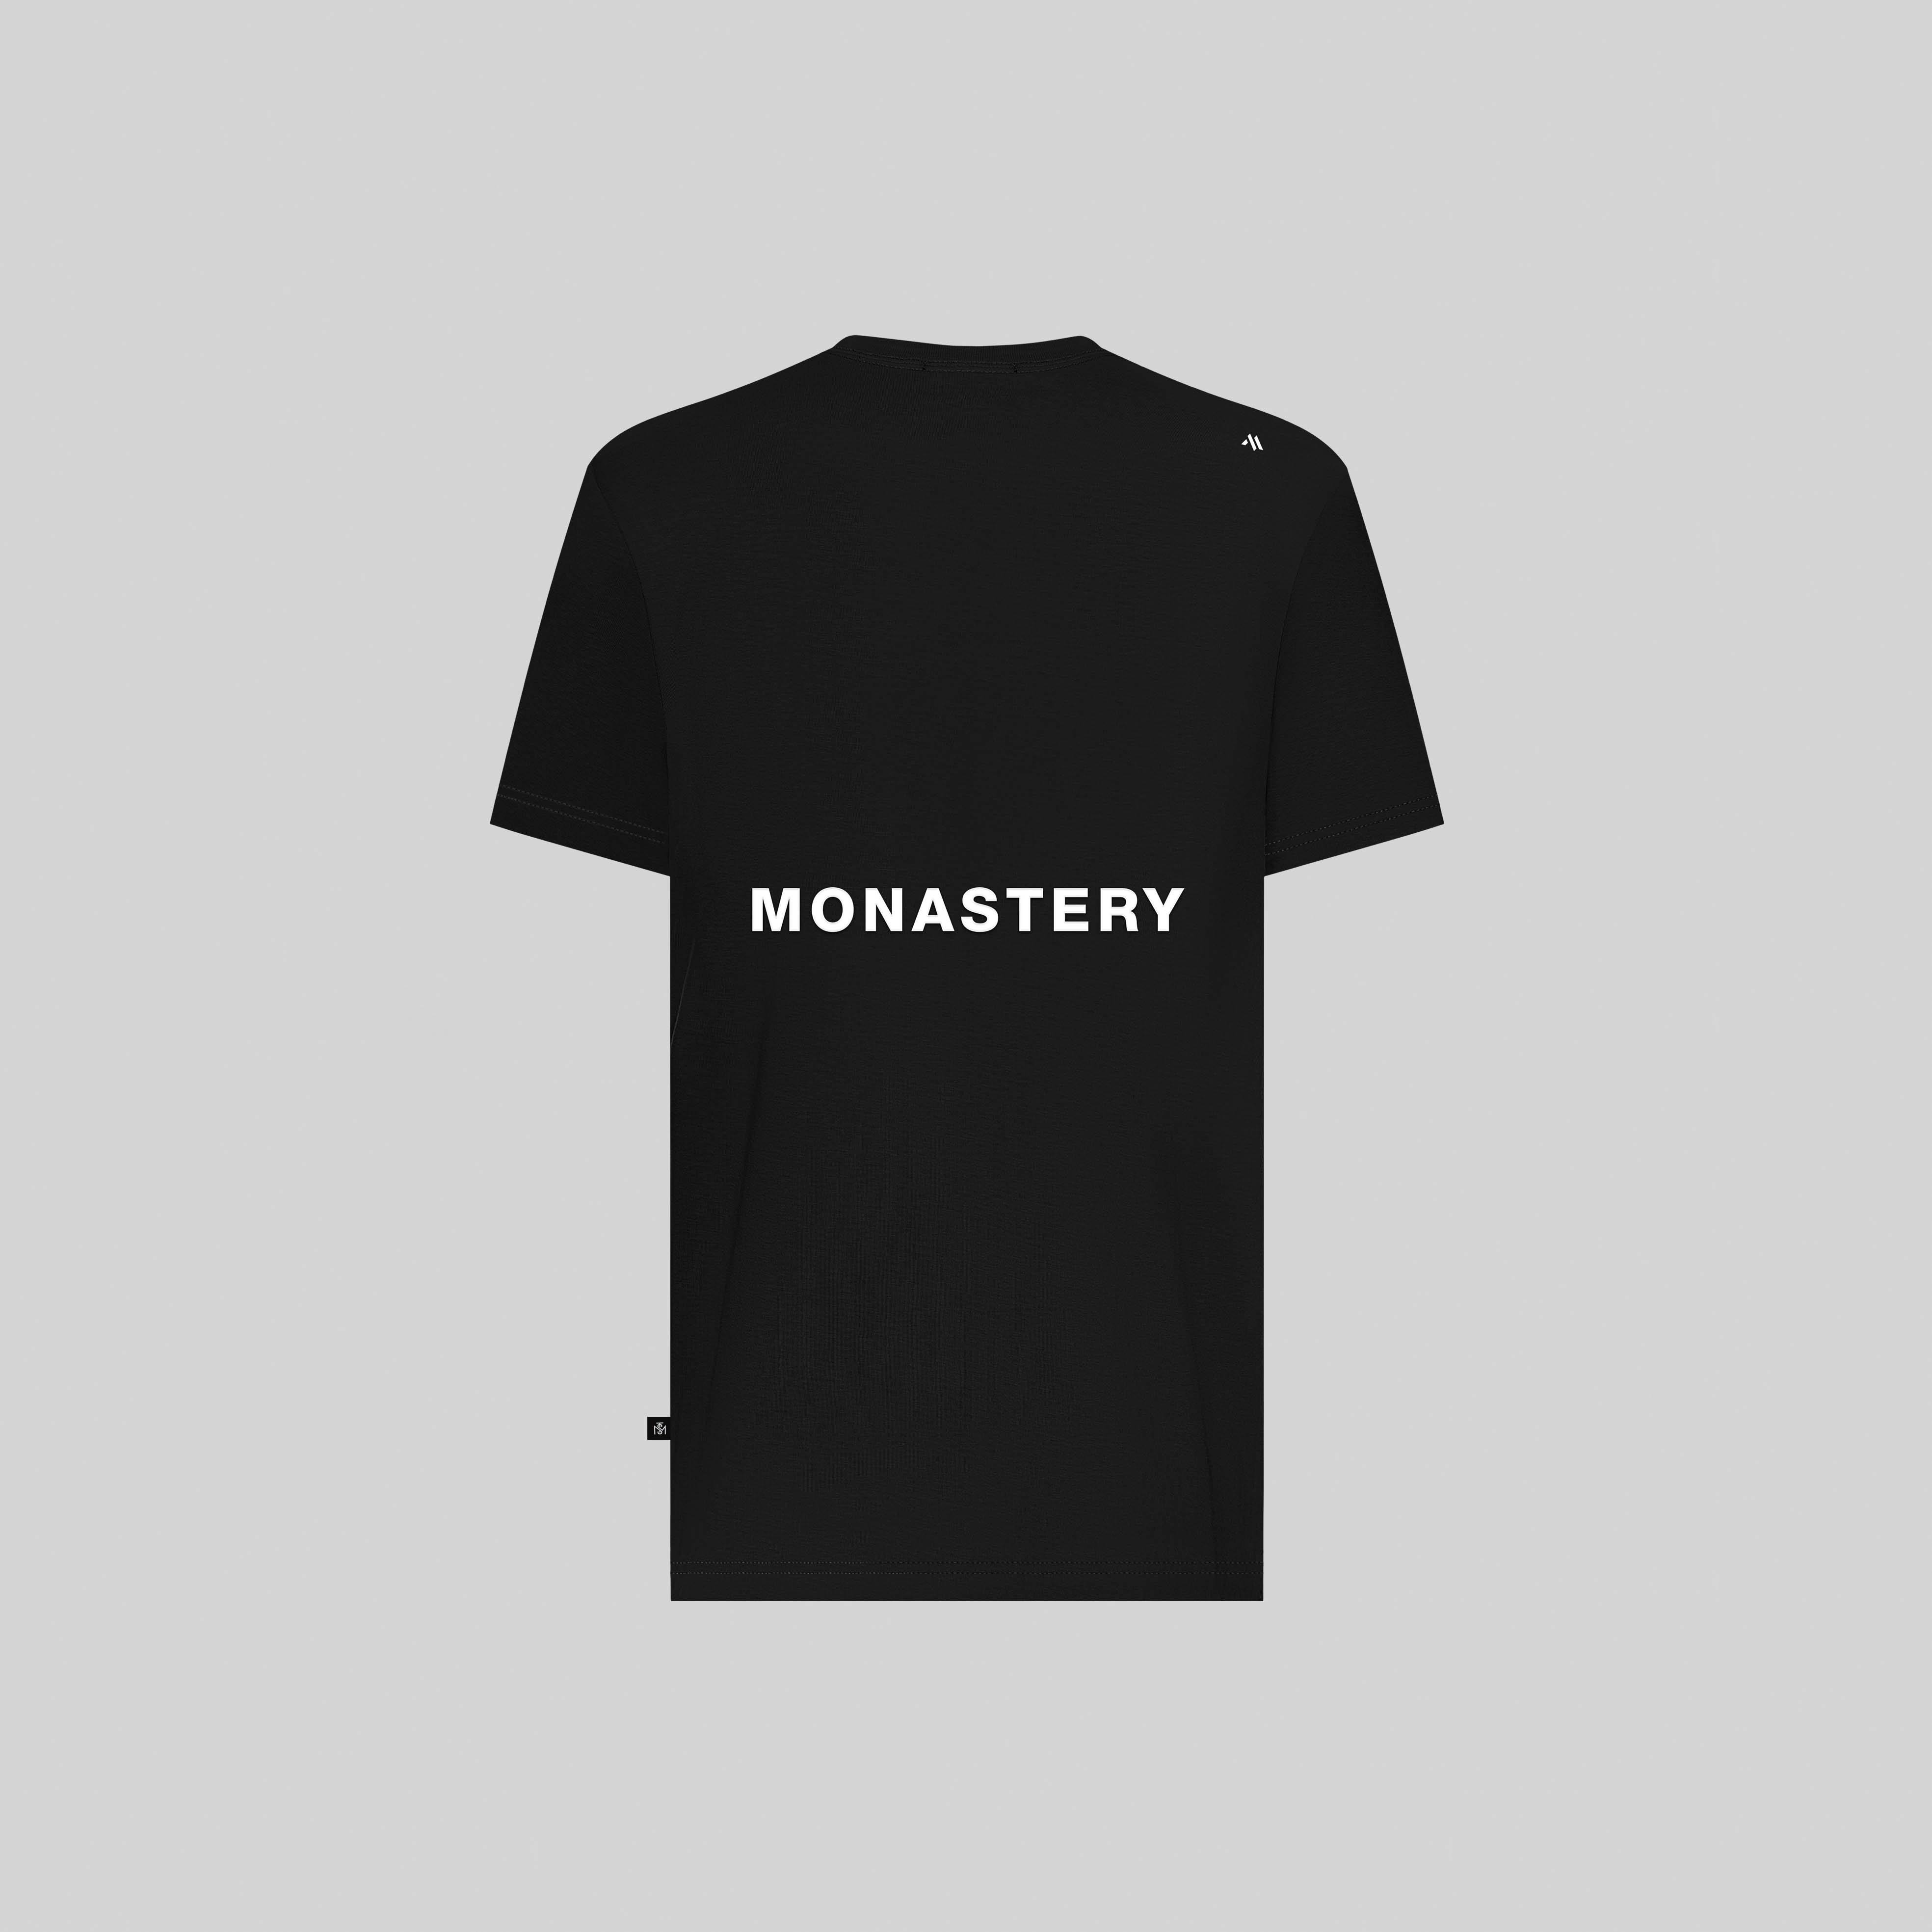 ZARE BLACK T-SHIRT | Monastery Couture